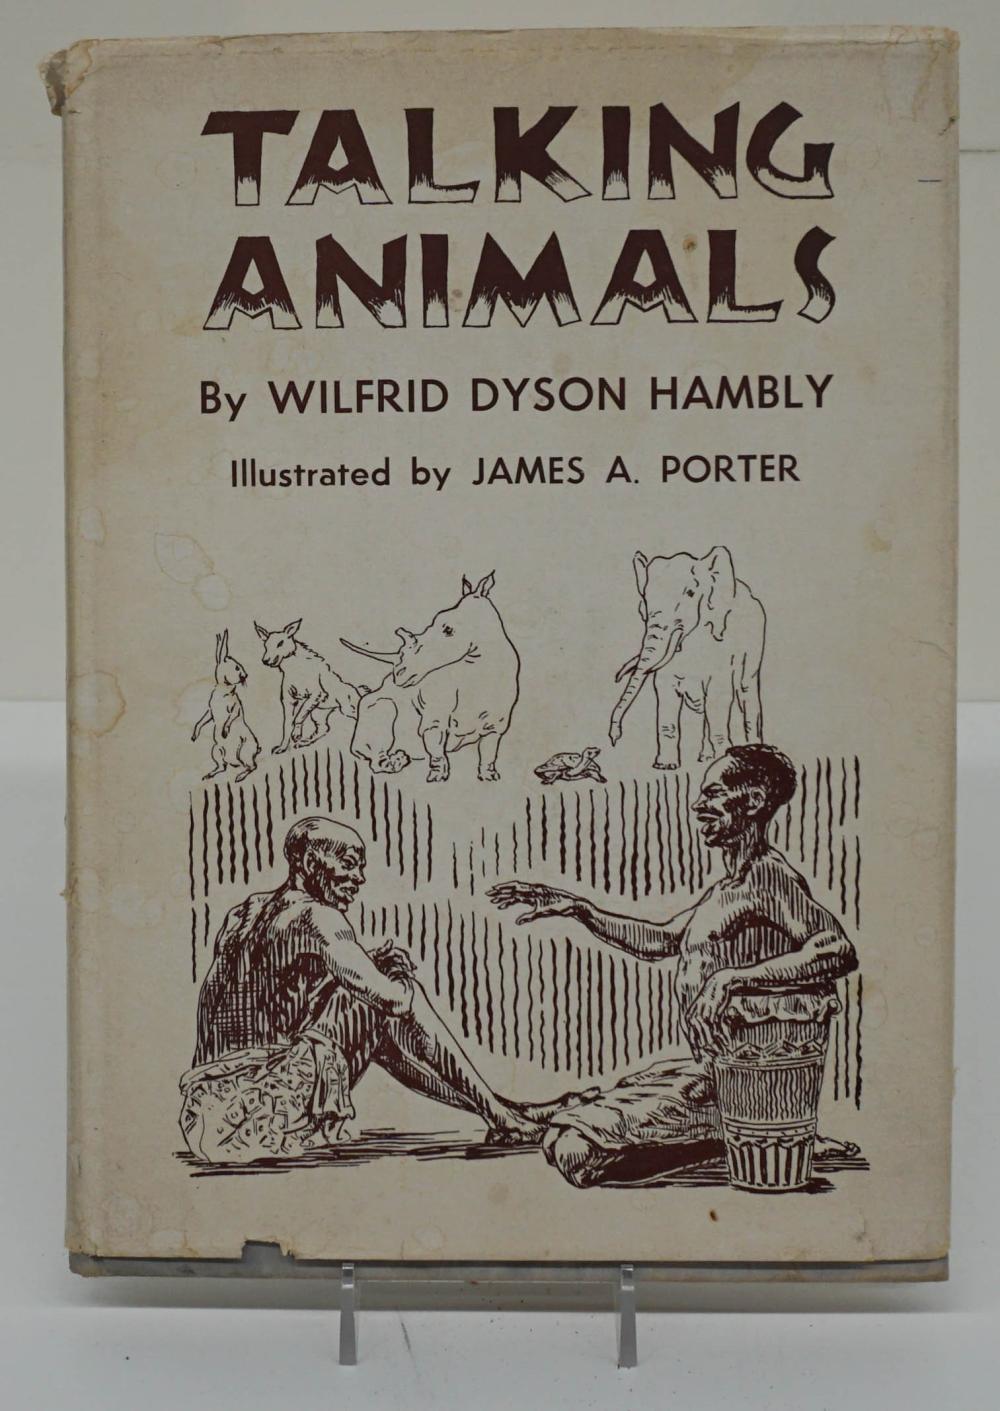 WILFRID DYSON HAMBLY AMERICAN 2e4c92